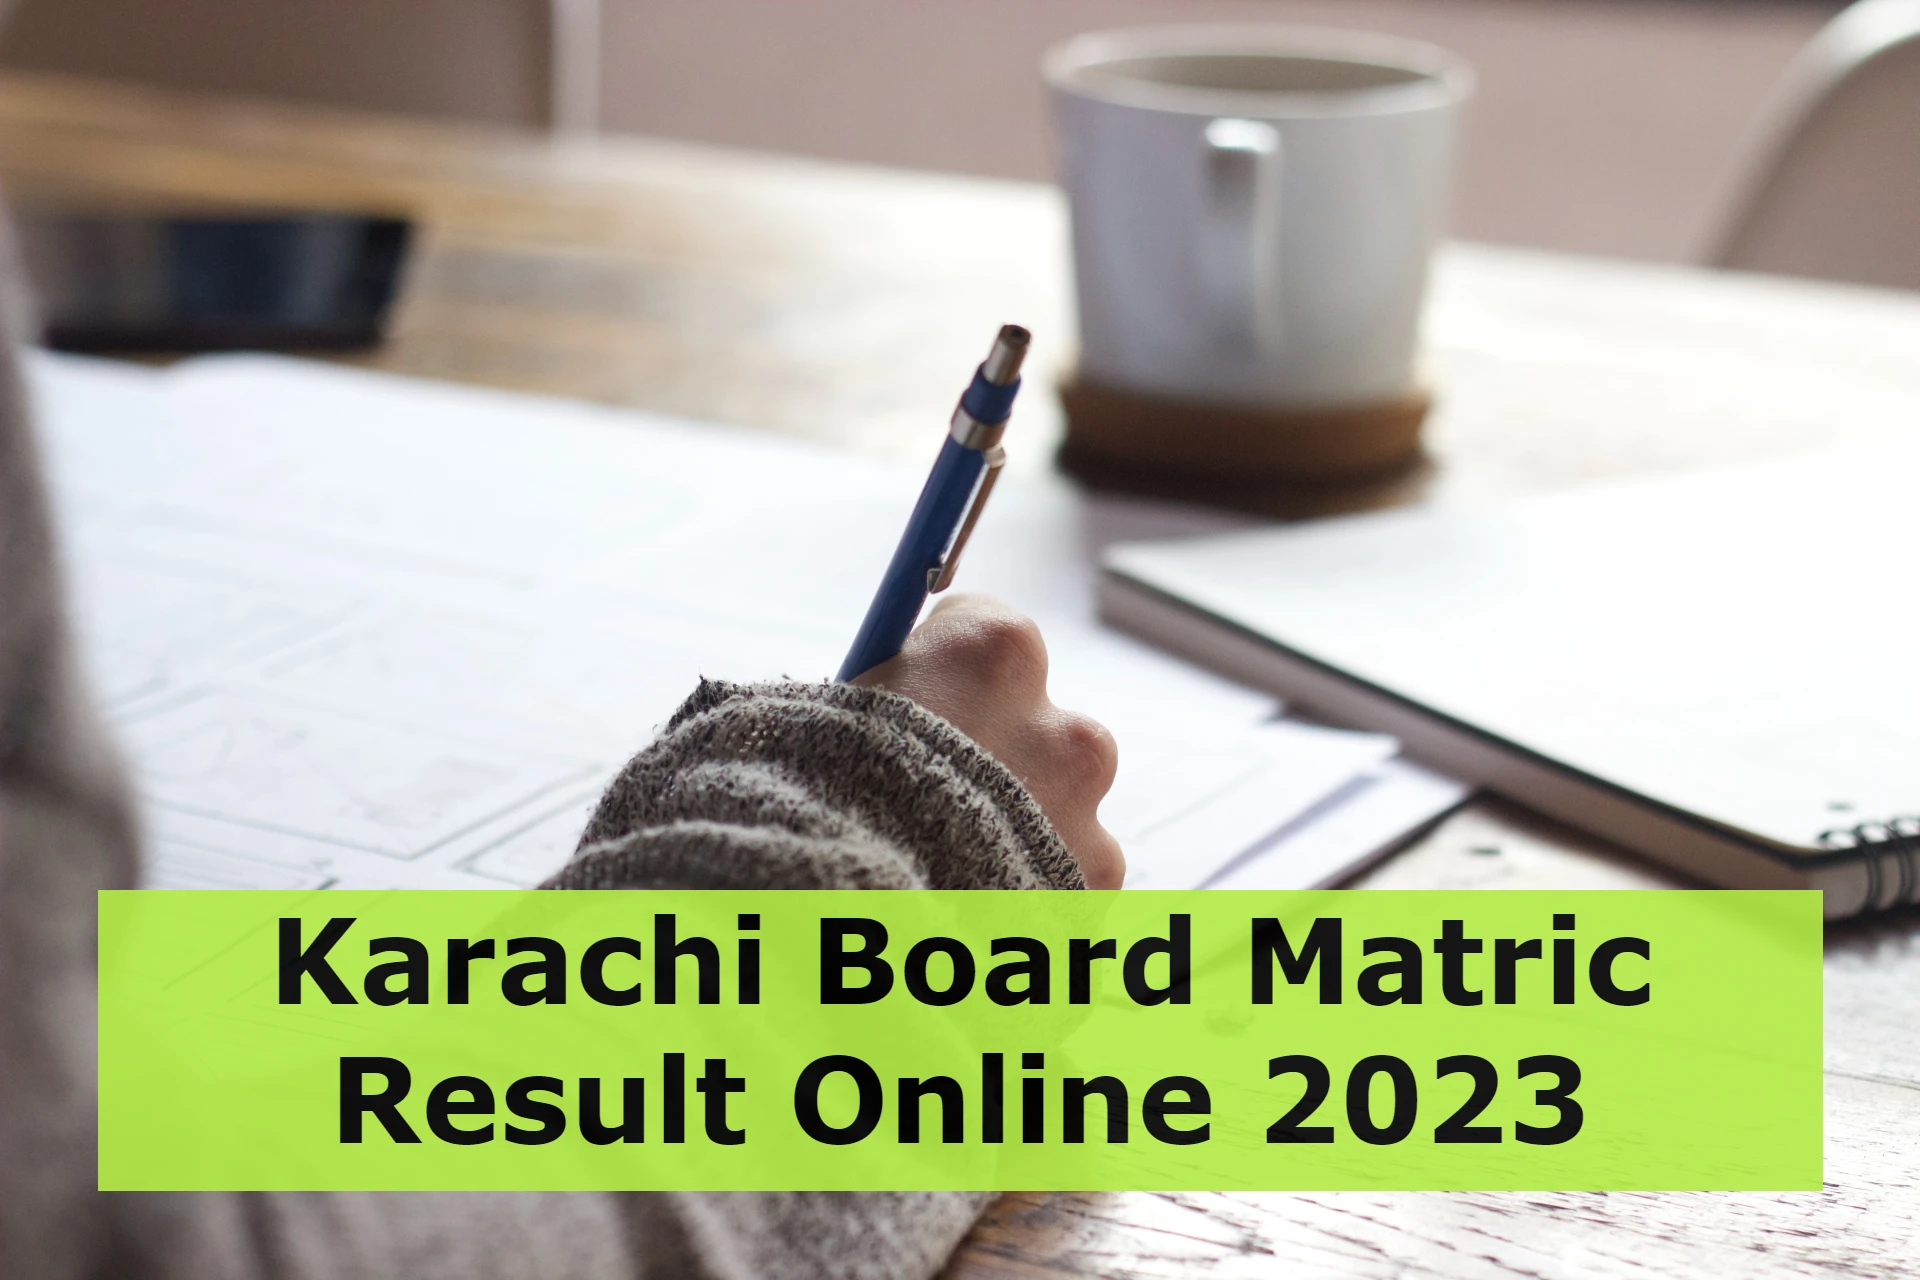 Karachi Board Matric Result 2023